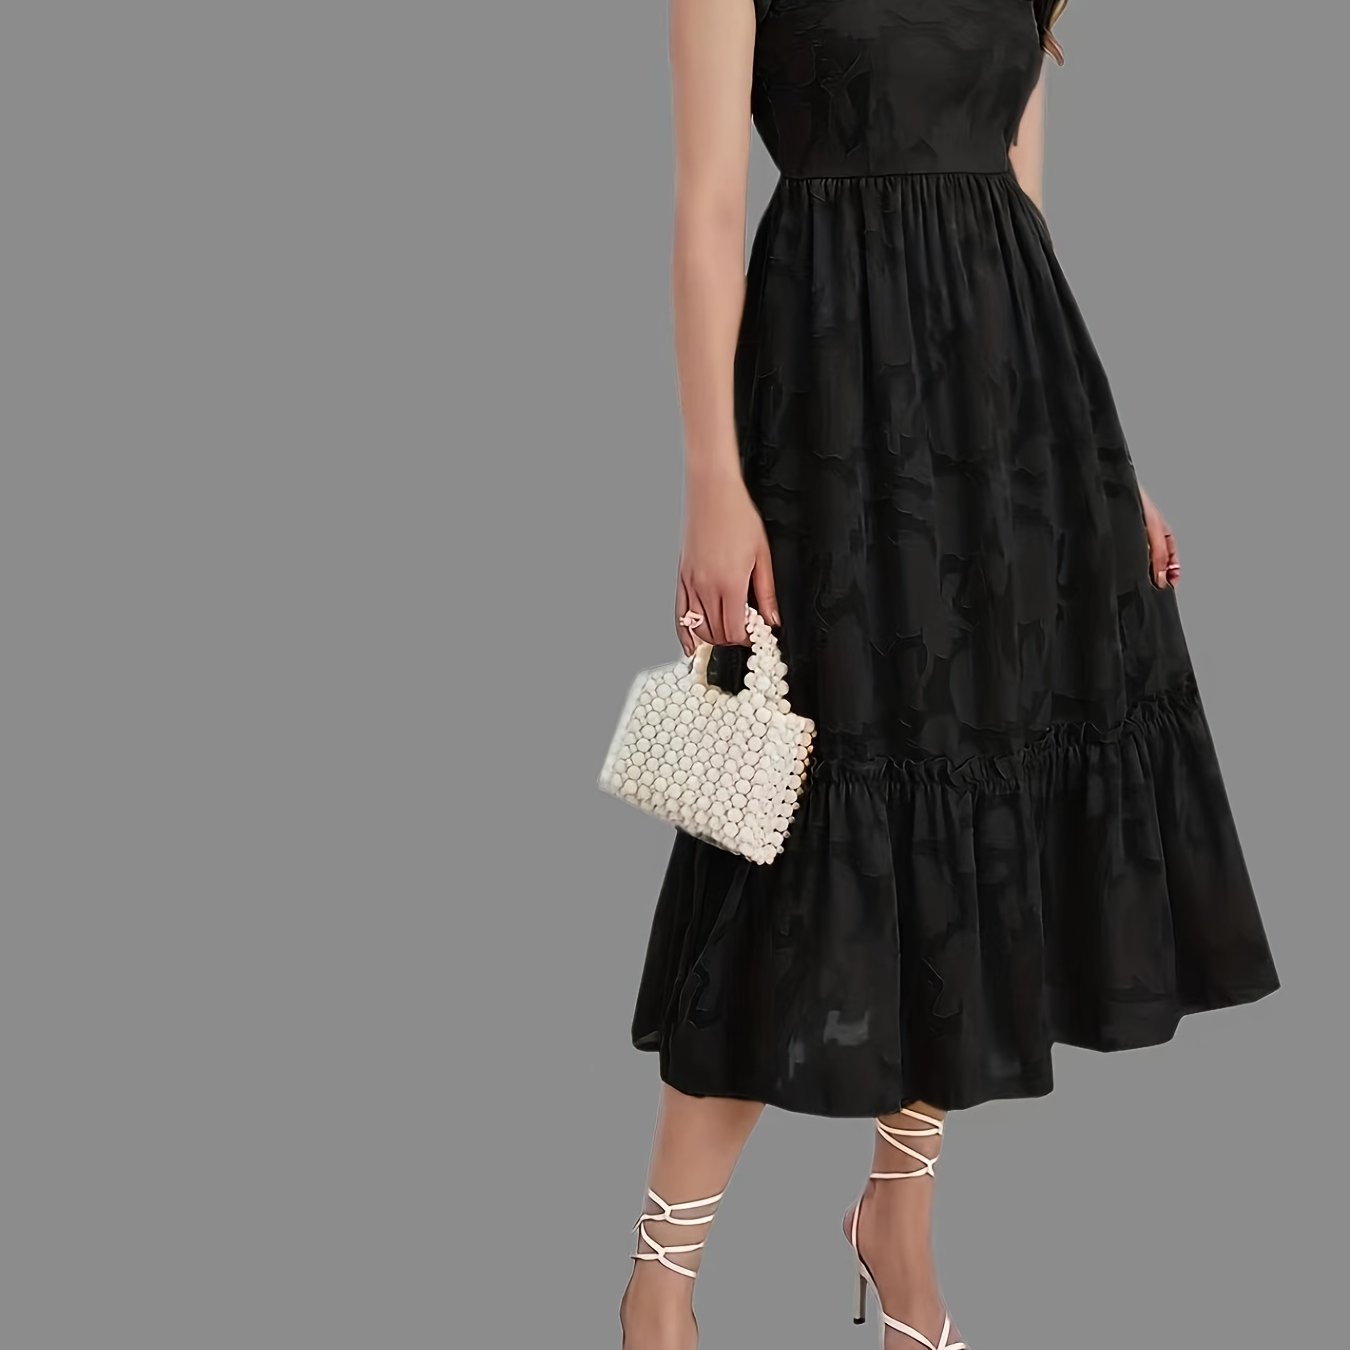 Antmvs Lettuce Trim Jacquard Dress, Elegant Sleeveless Pleated Slim Waist Dress, Women's Clothing